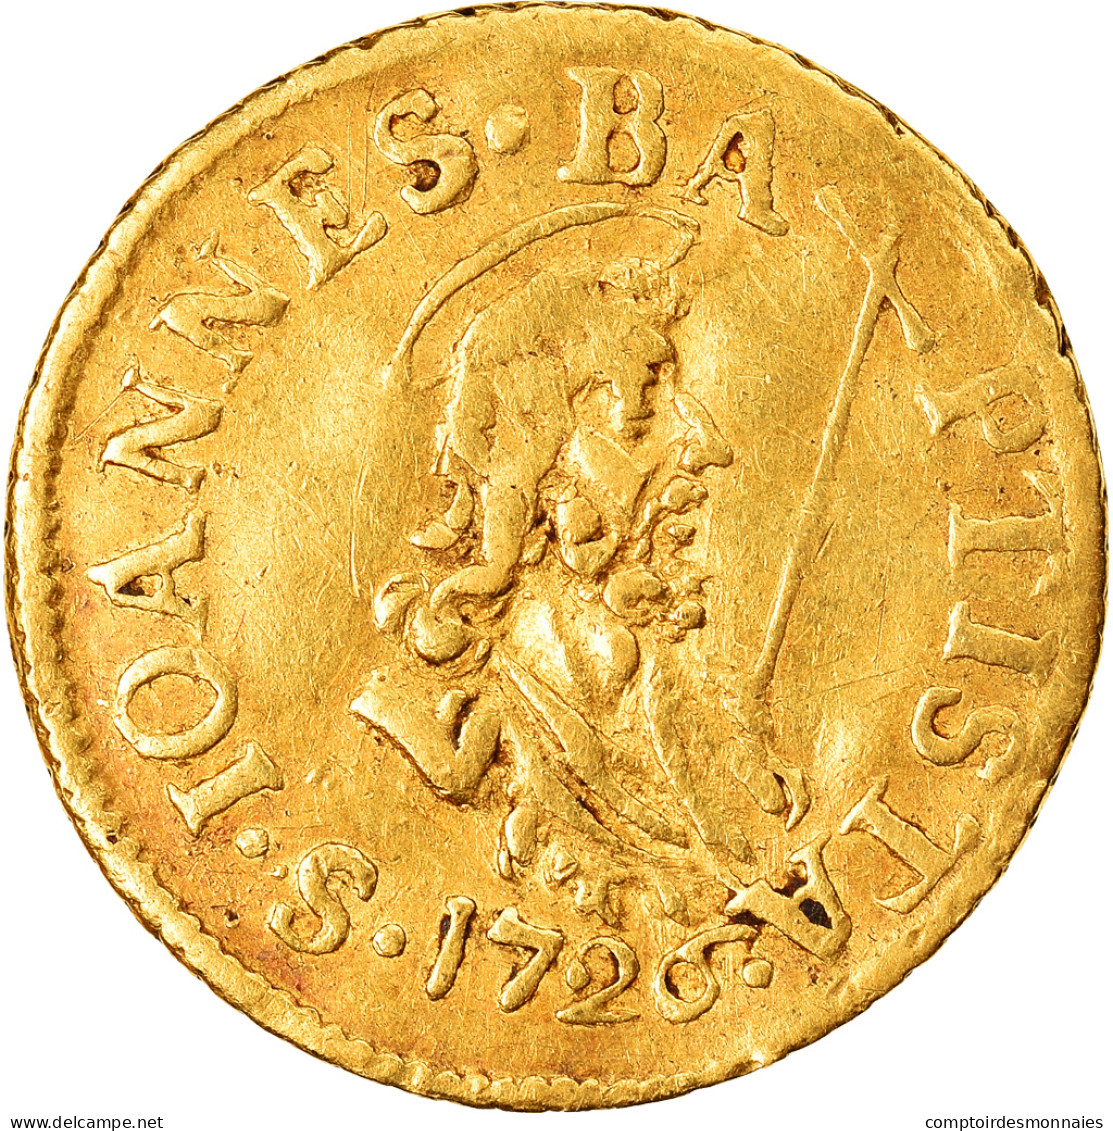 Monnaie, États Italiens, TUSCANY, Giovanni Gaston, 1/2 Florino, 1726, Florence - Tuscan